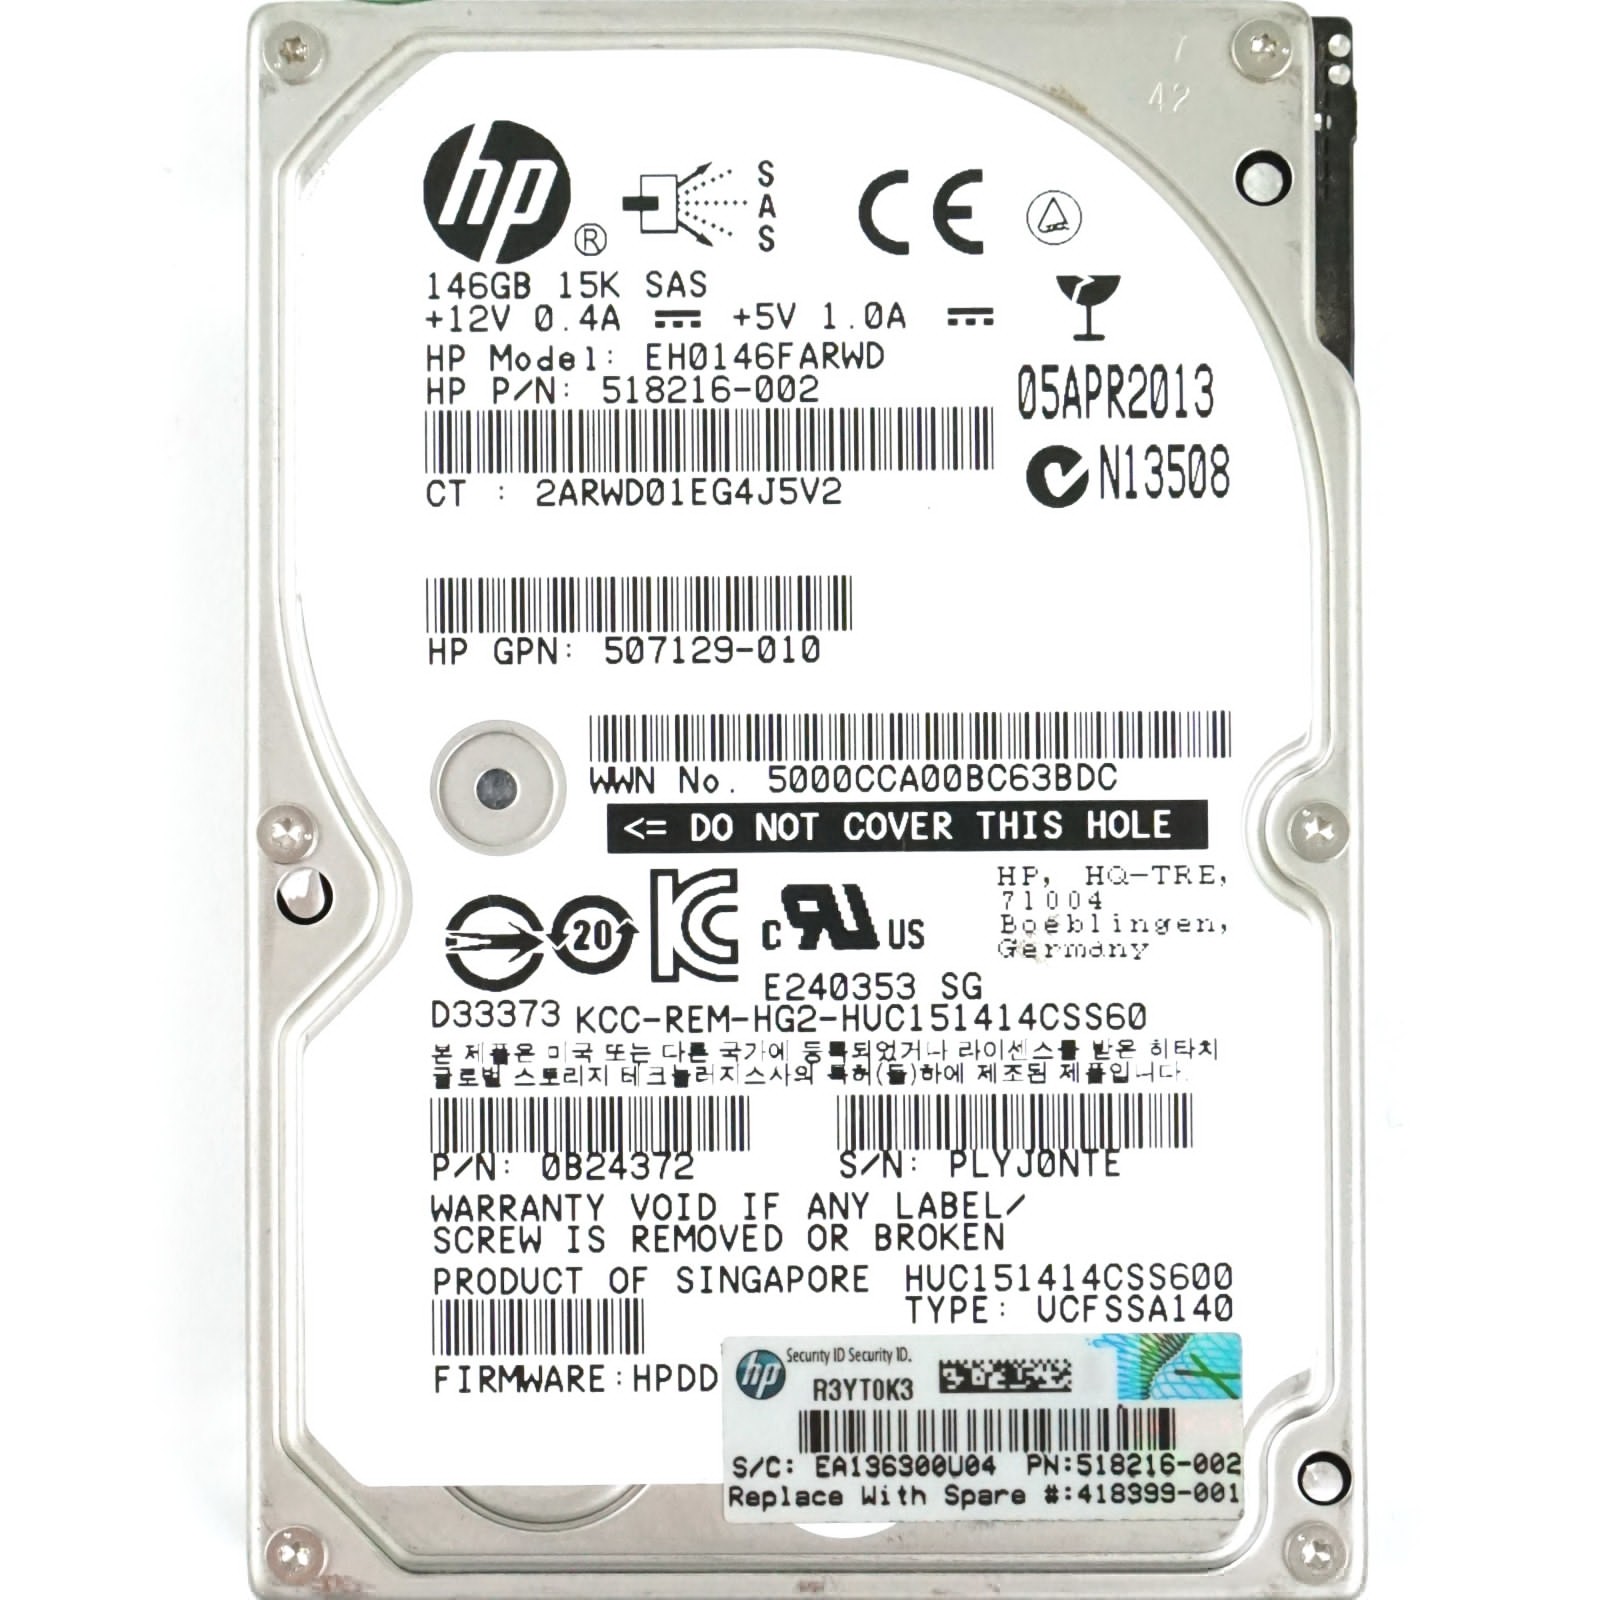 HP (518216-002) 146GB Dual Port SAS-2 (SFF 2.5") 6Gbps 15K HDD